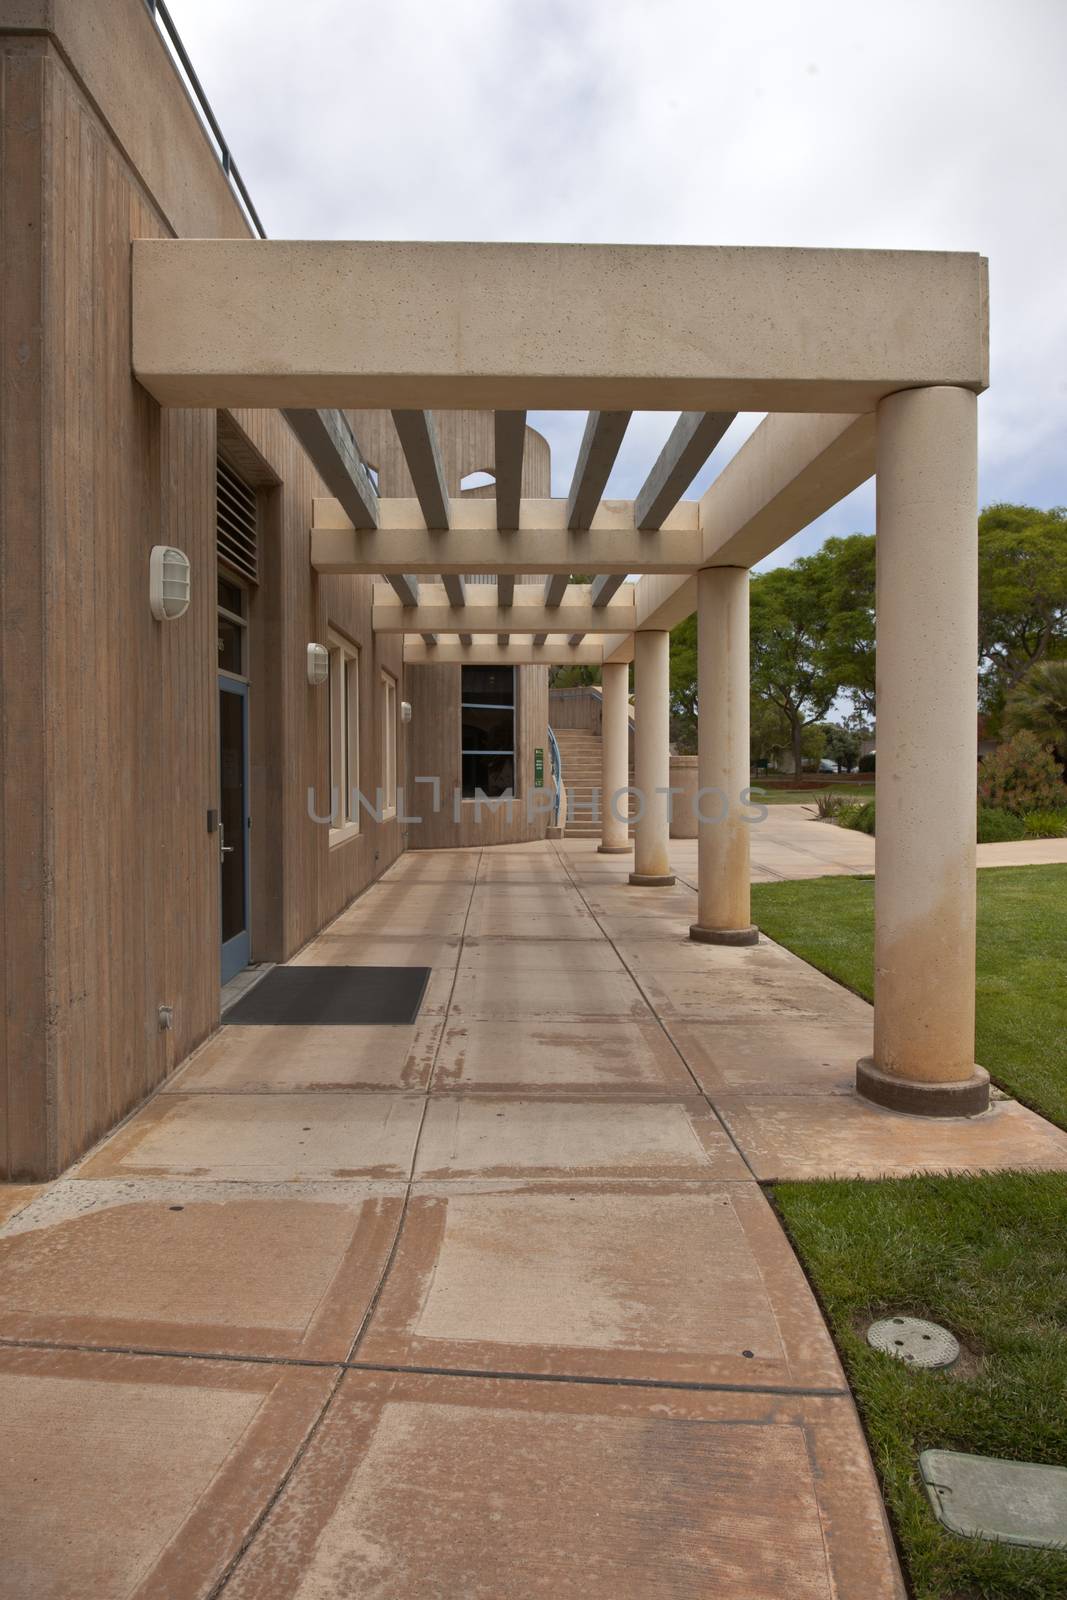 Architecture and park Point Loma Nazarene University California.